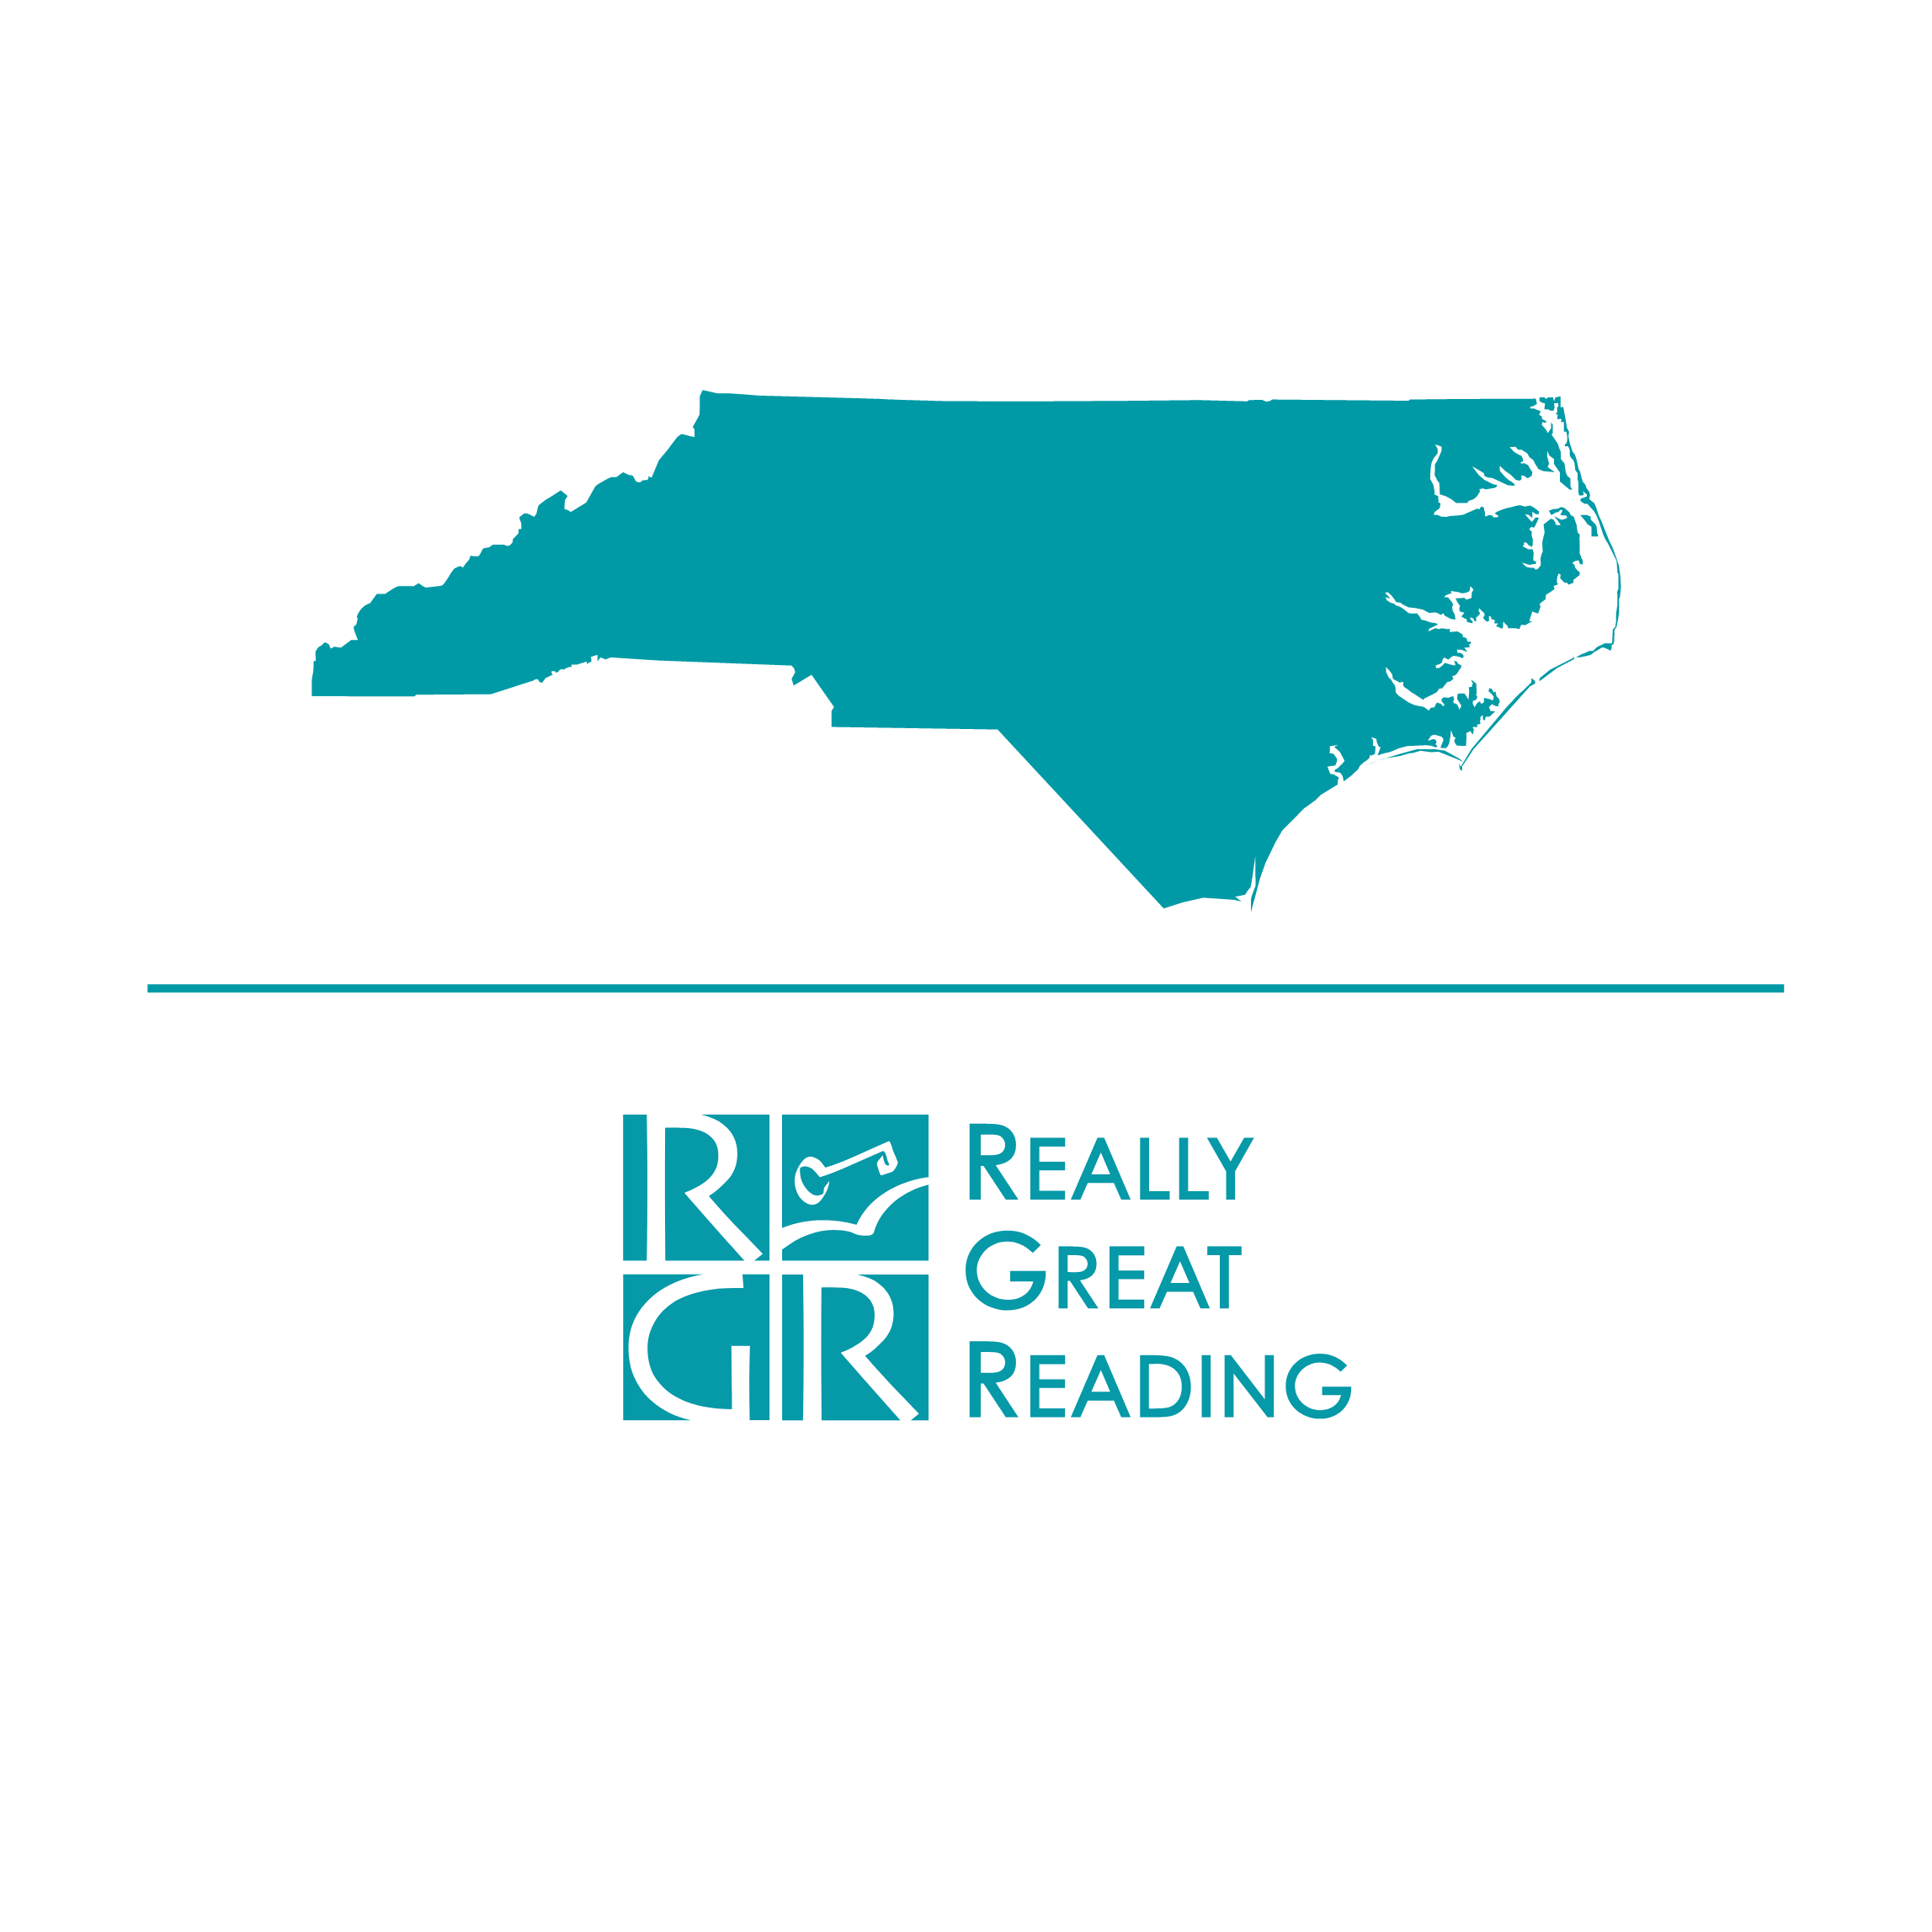 Science of Reading and North Carolina